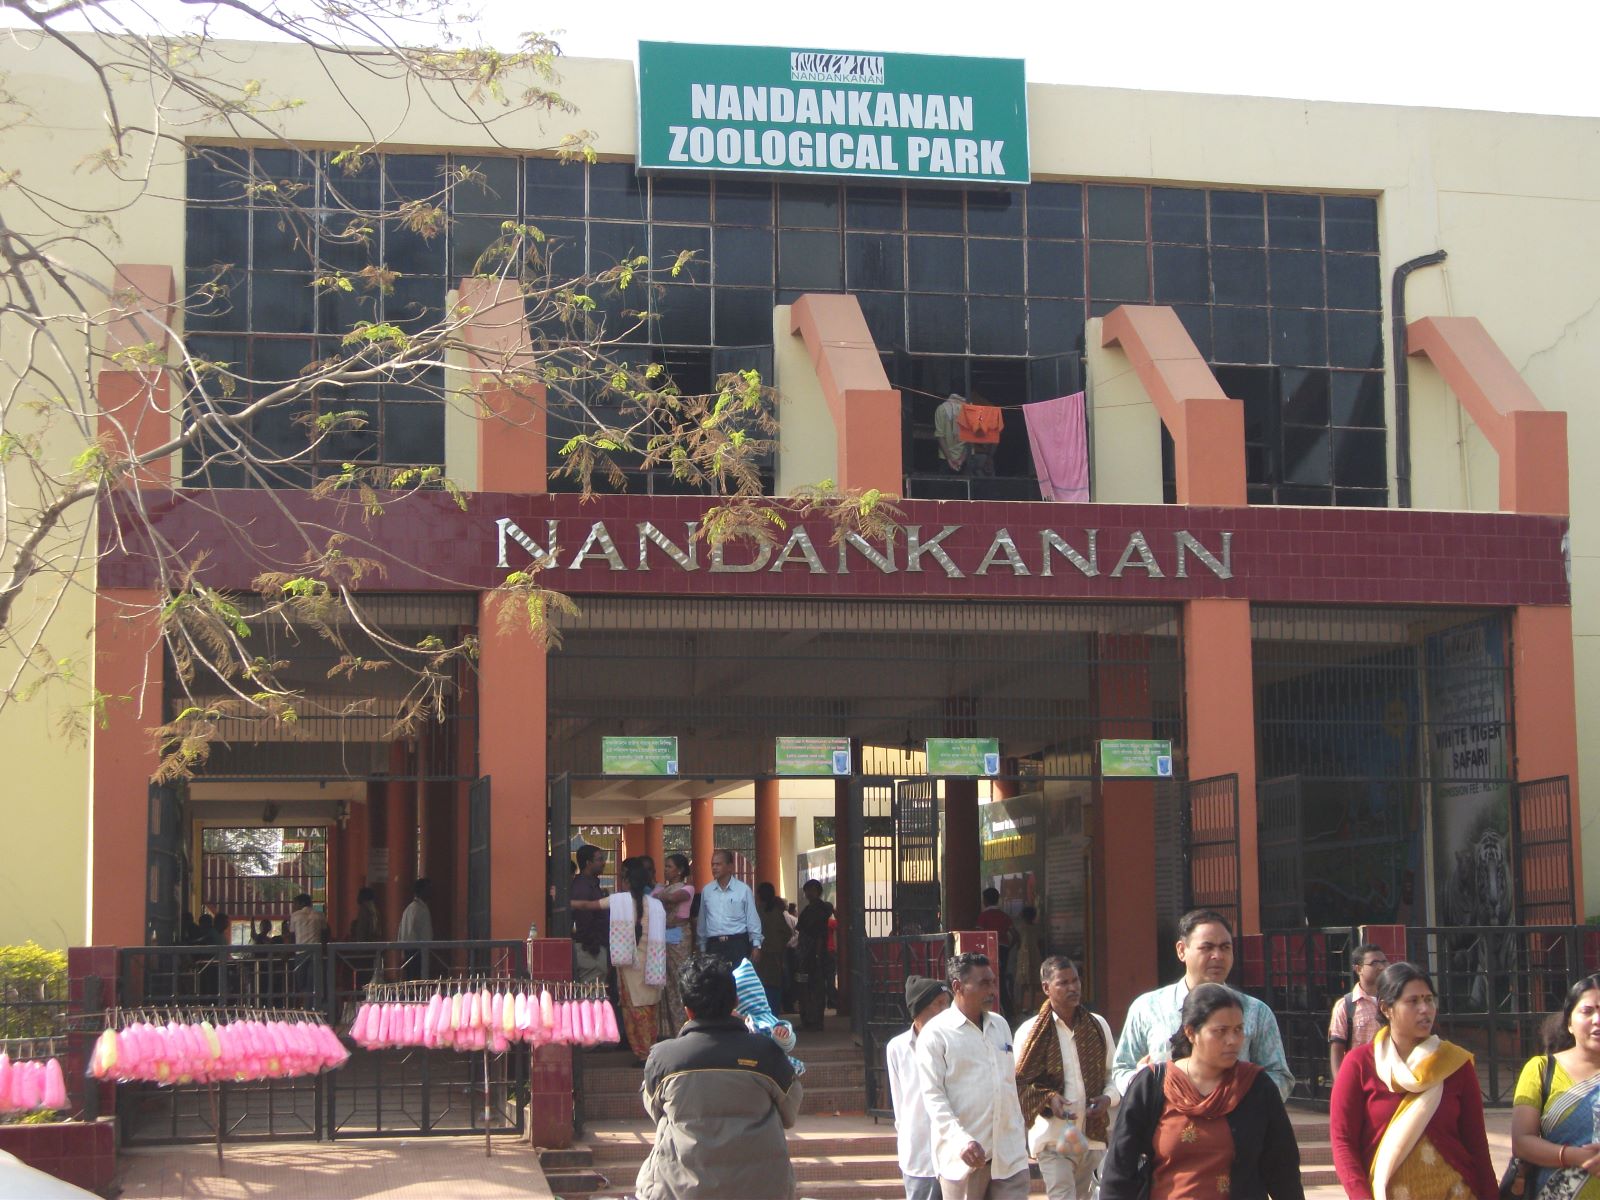 16-surprising-facts-about-nandankanan-zoological-park